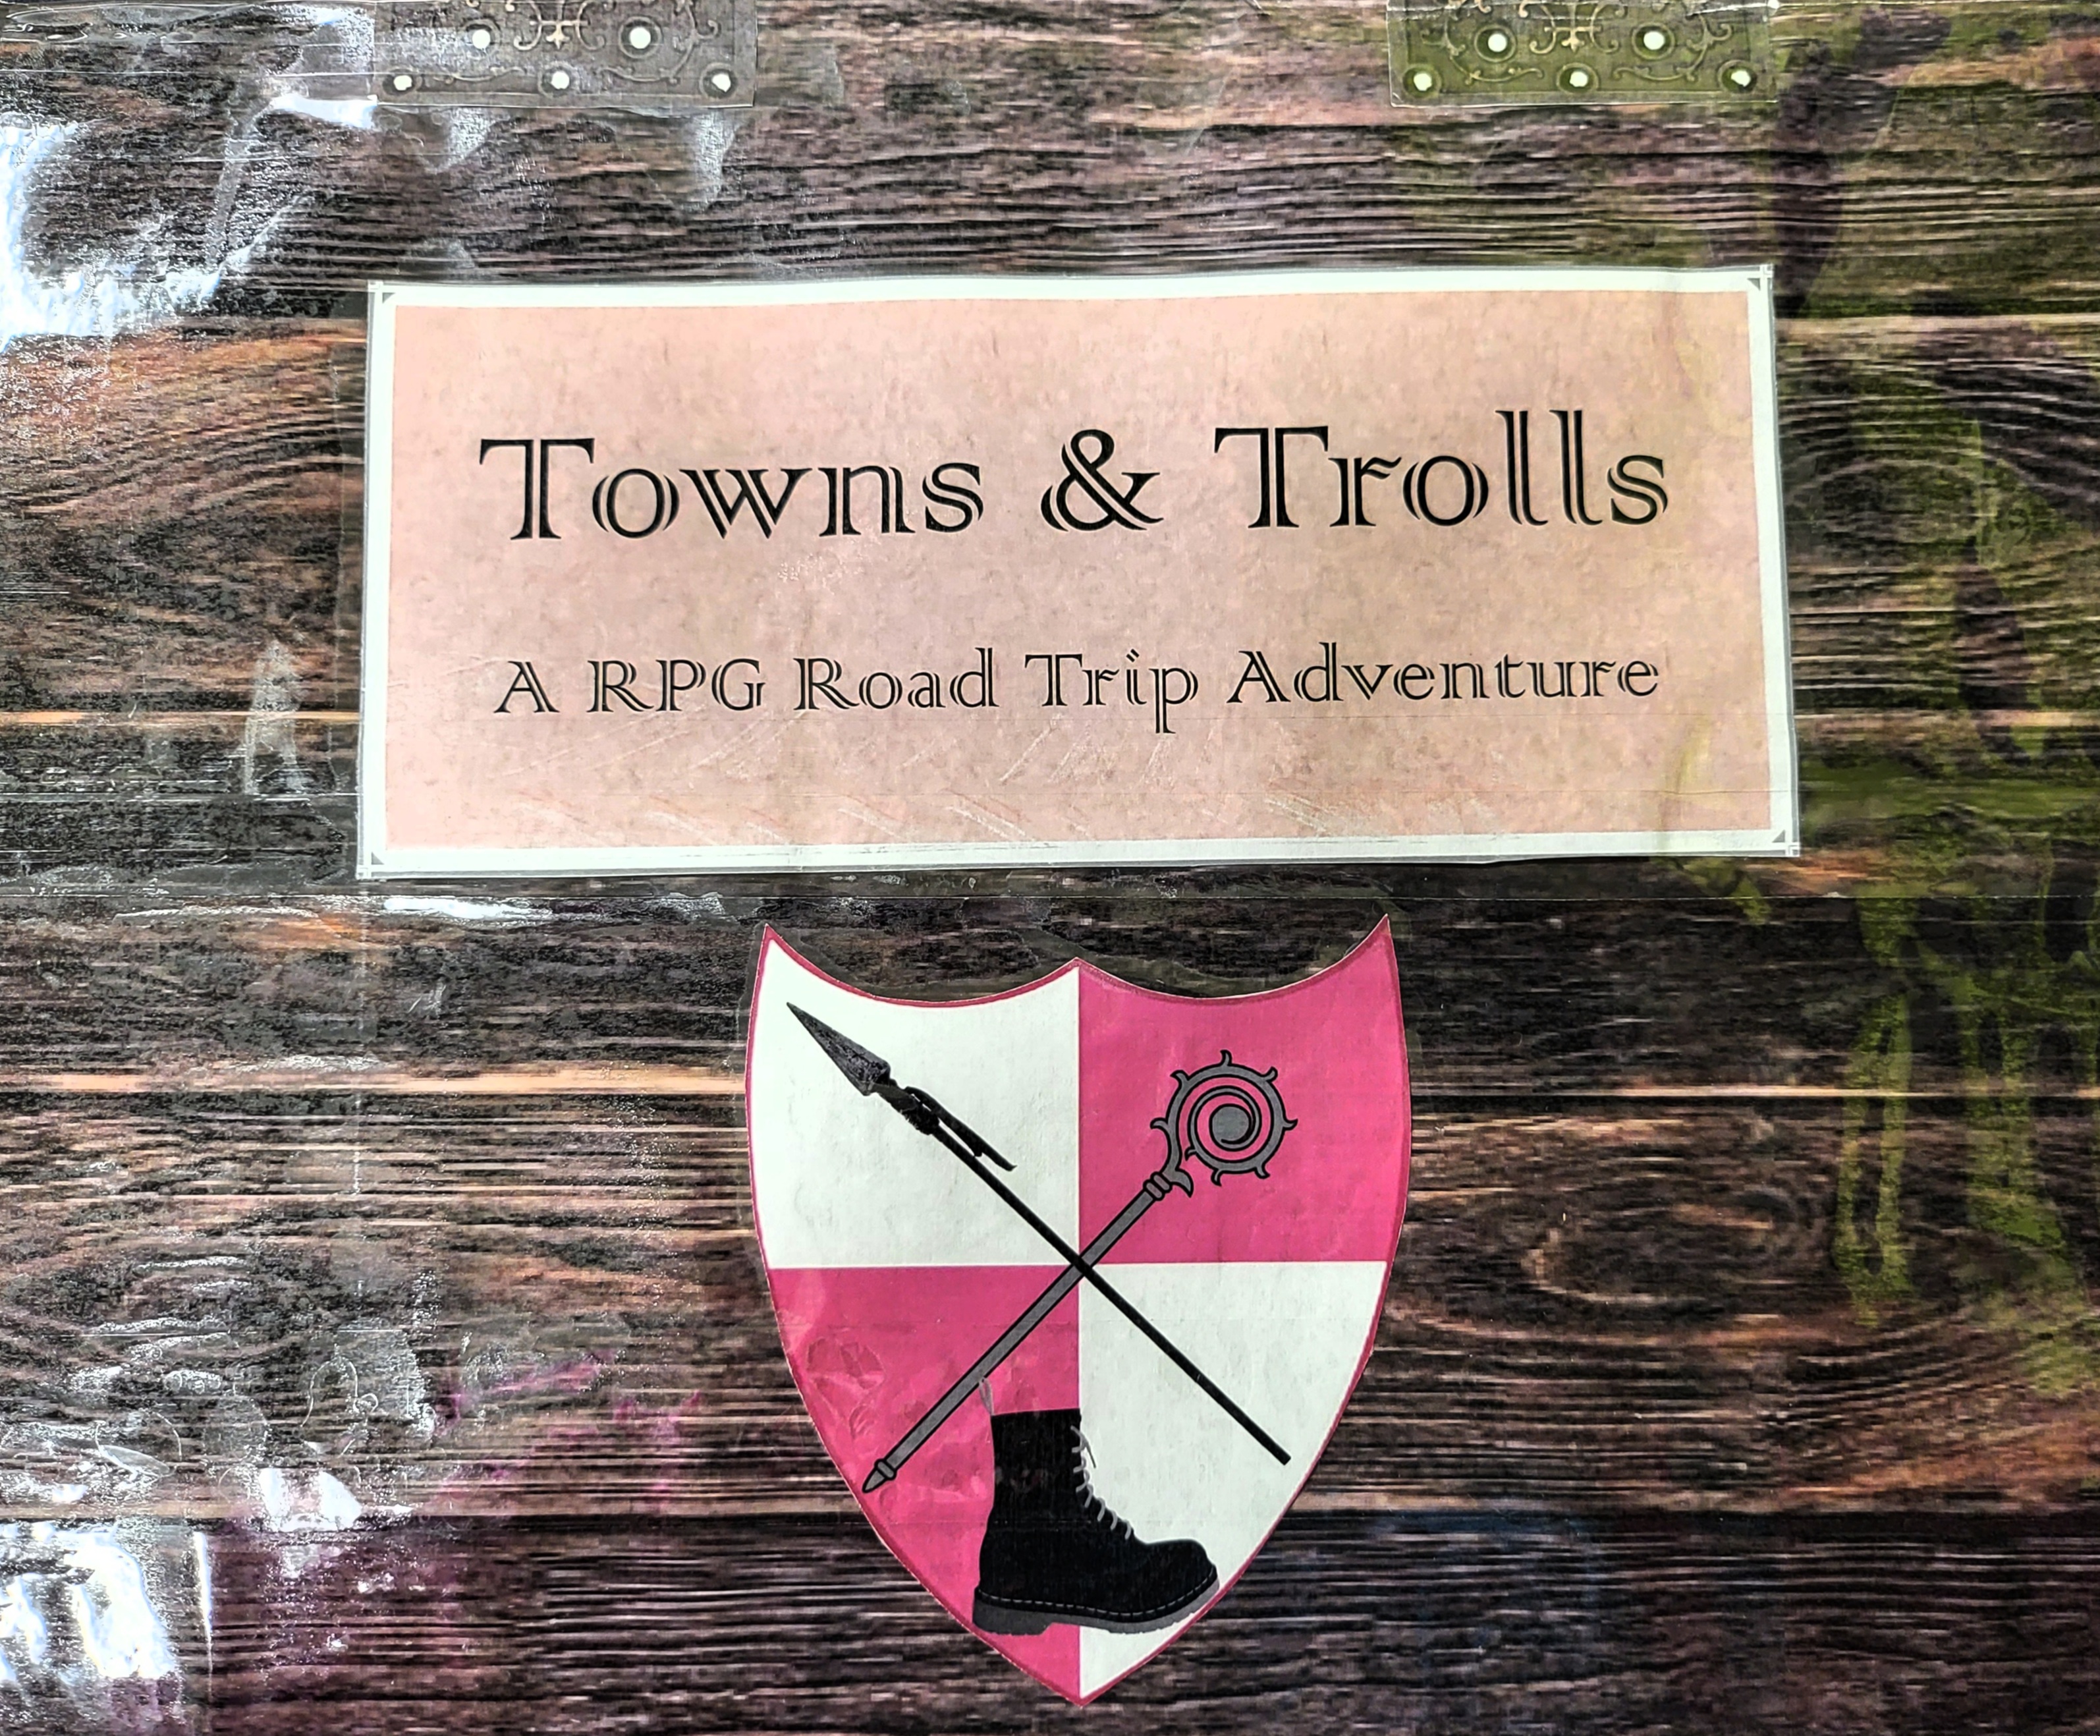 Towns & Trolls.jpg